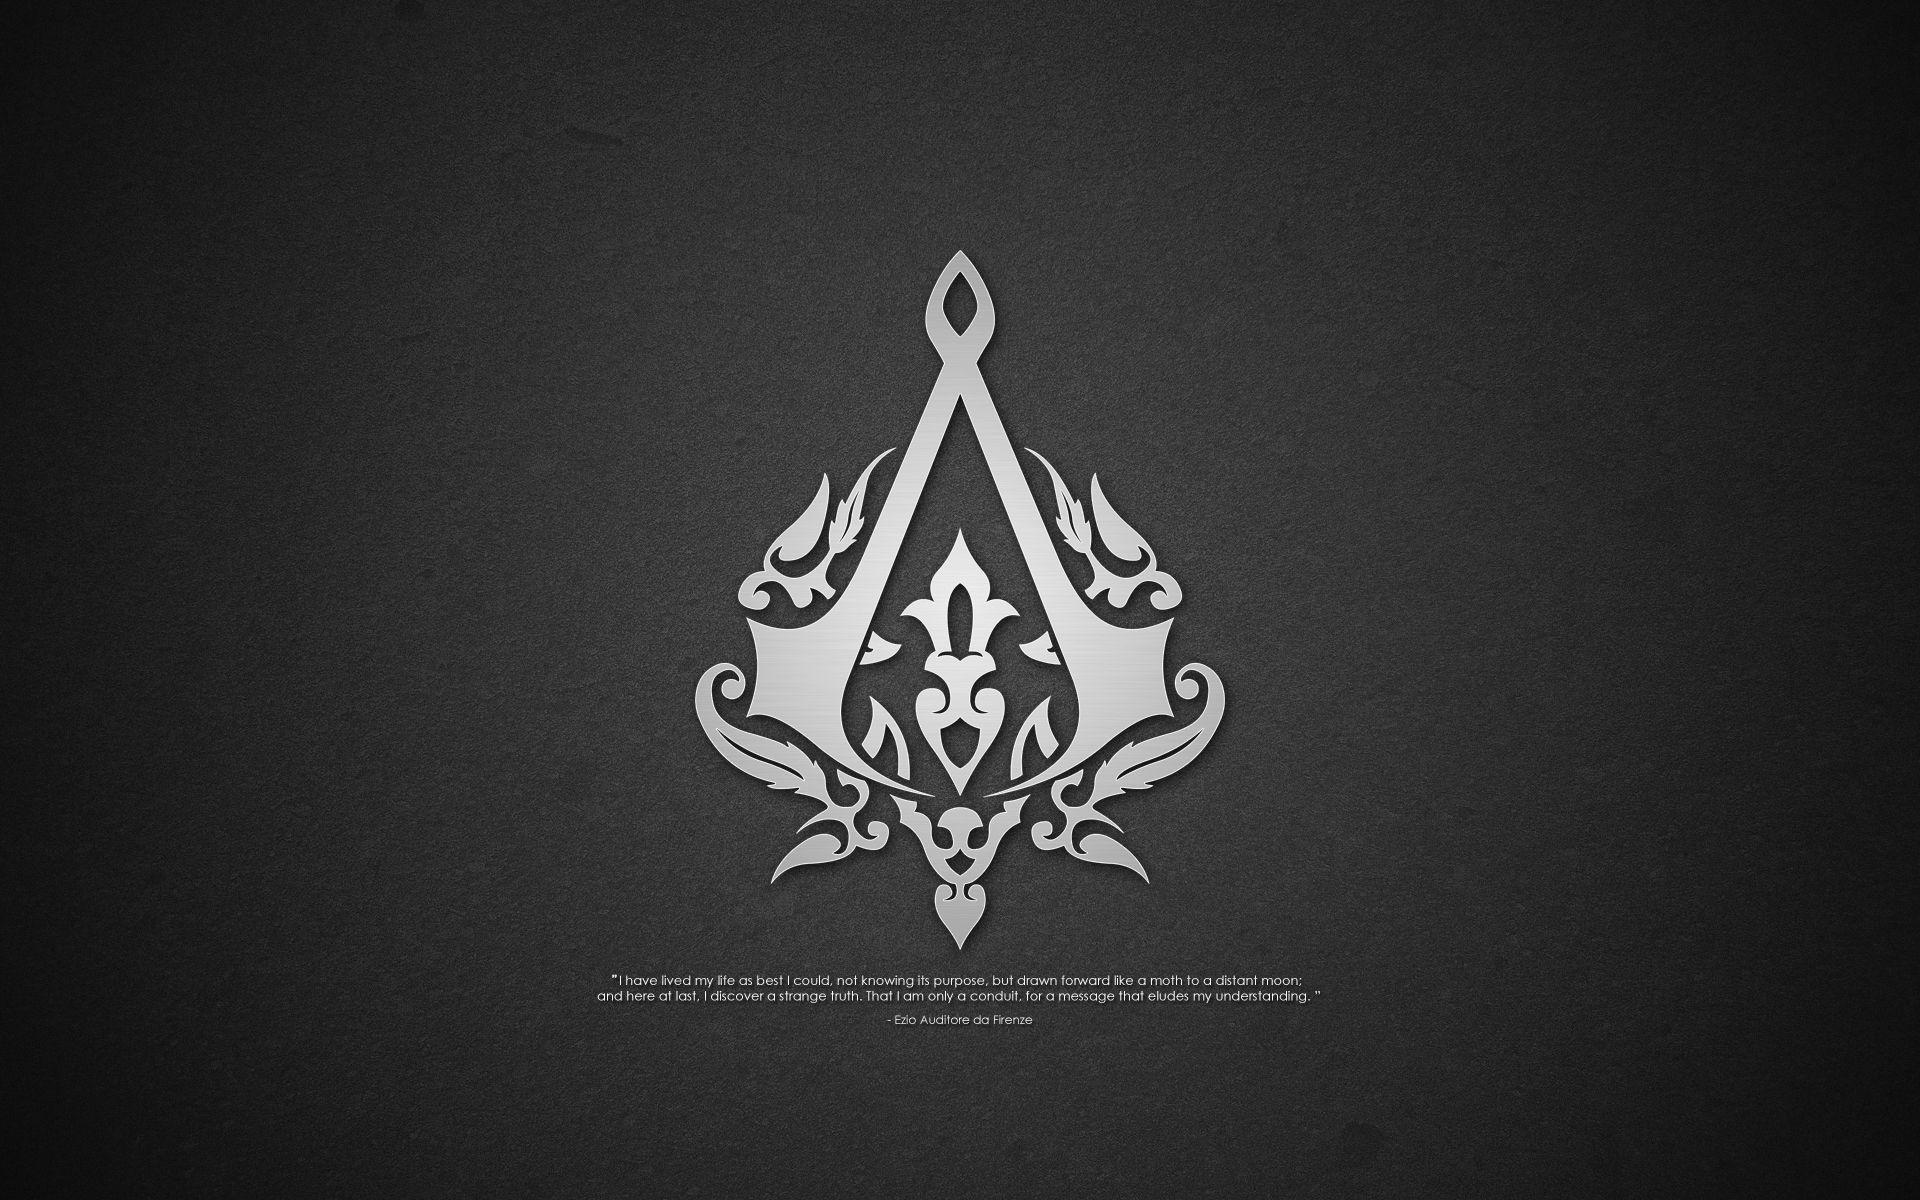 Assassin's Creed: Revelations Wallpaper